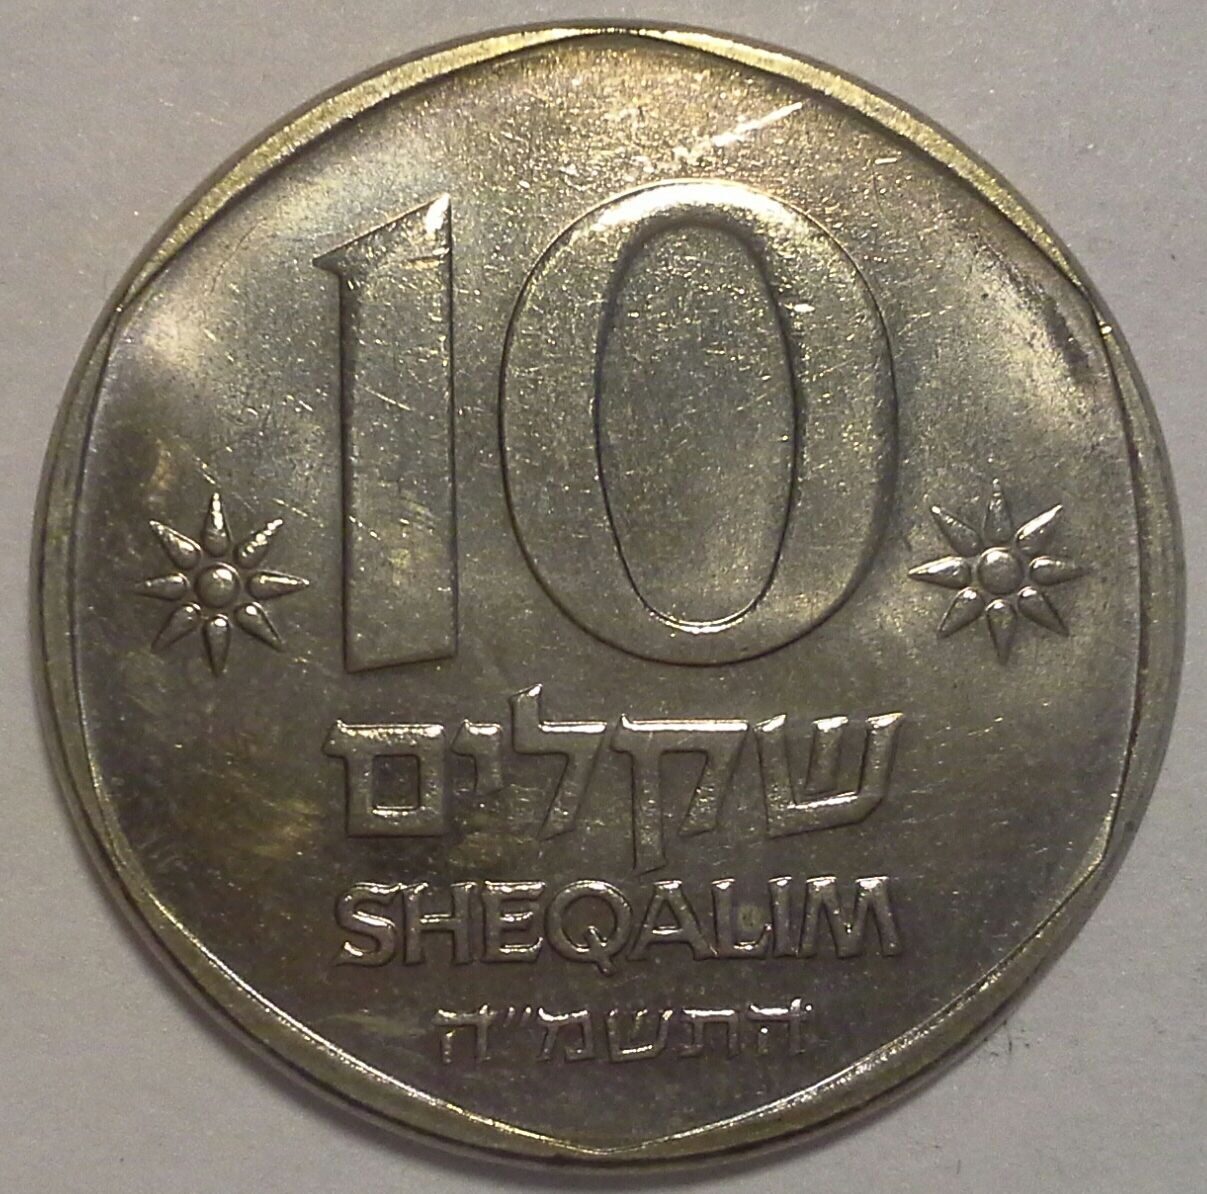 10 Шекелей 1985. 10 Шекелей фото. 10 Шекелей монета. 2 Шекеля в рублях. 25 шекелей